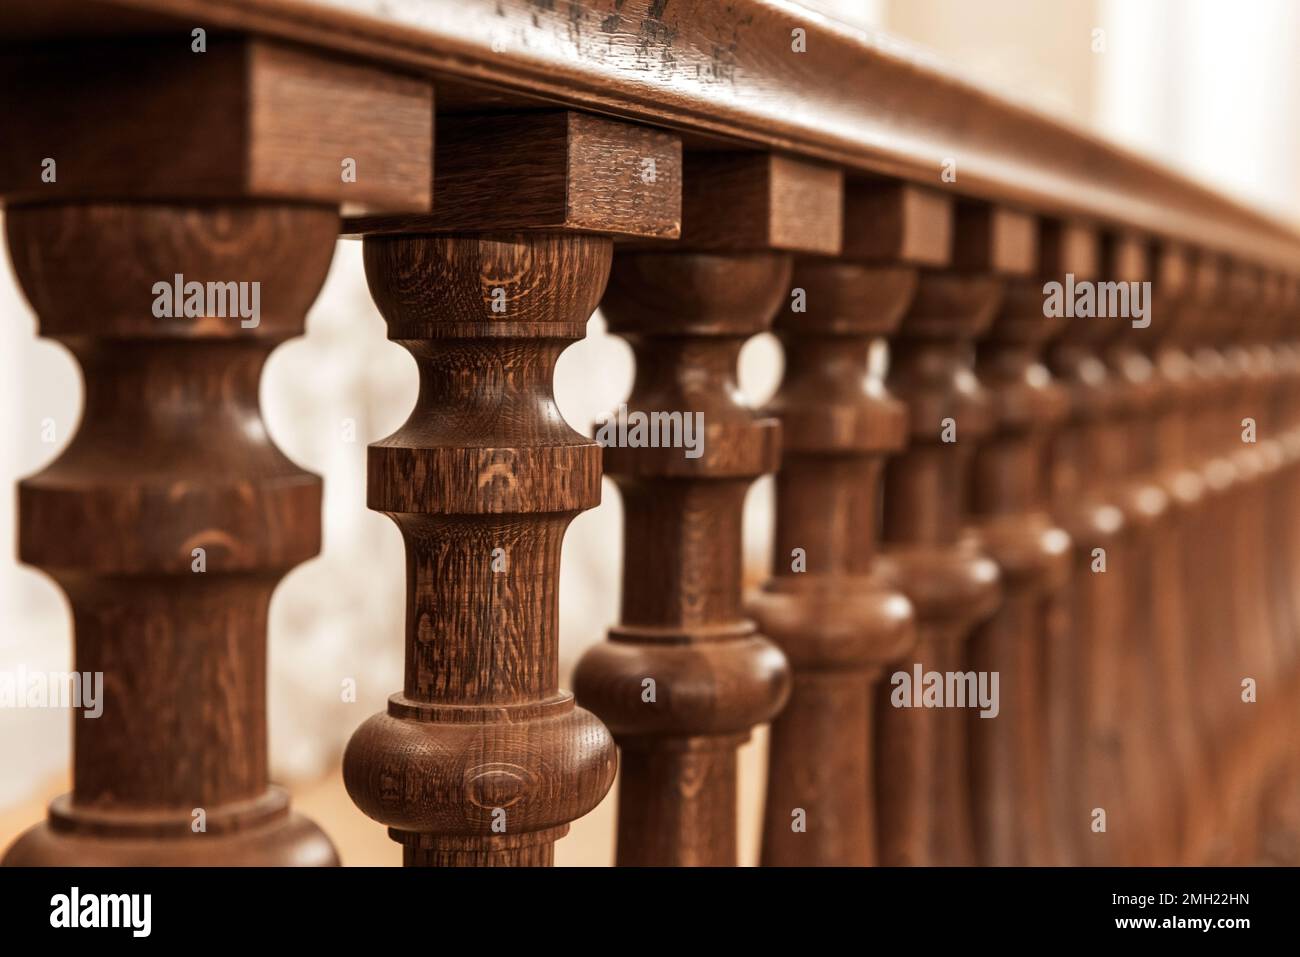 Balaustres, pilares y piñas - Escaleras de madera Evasar